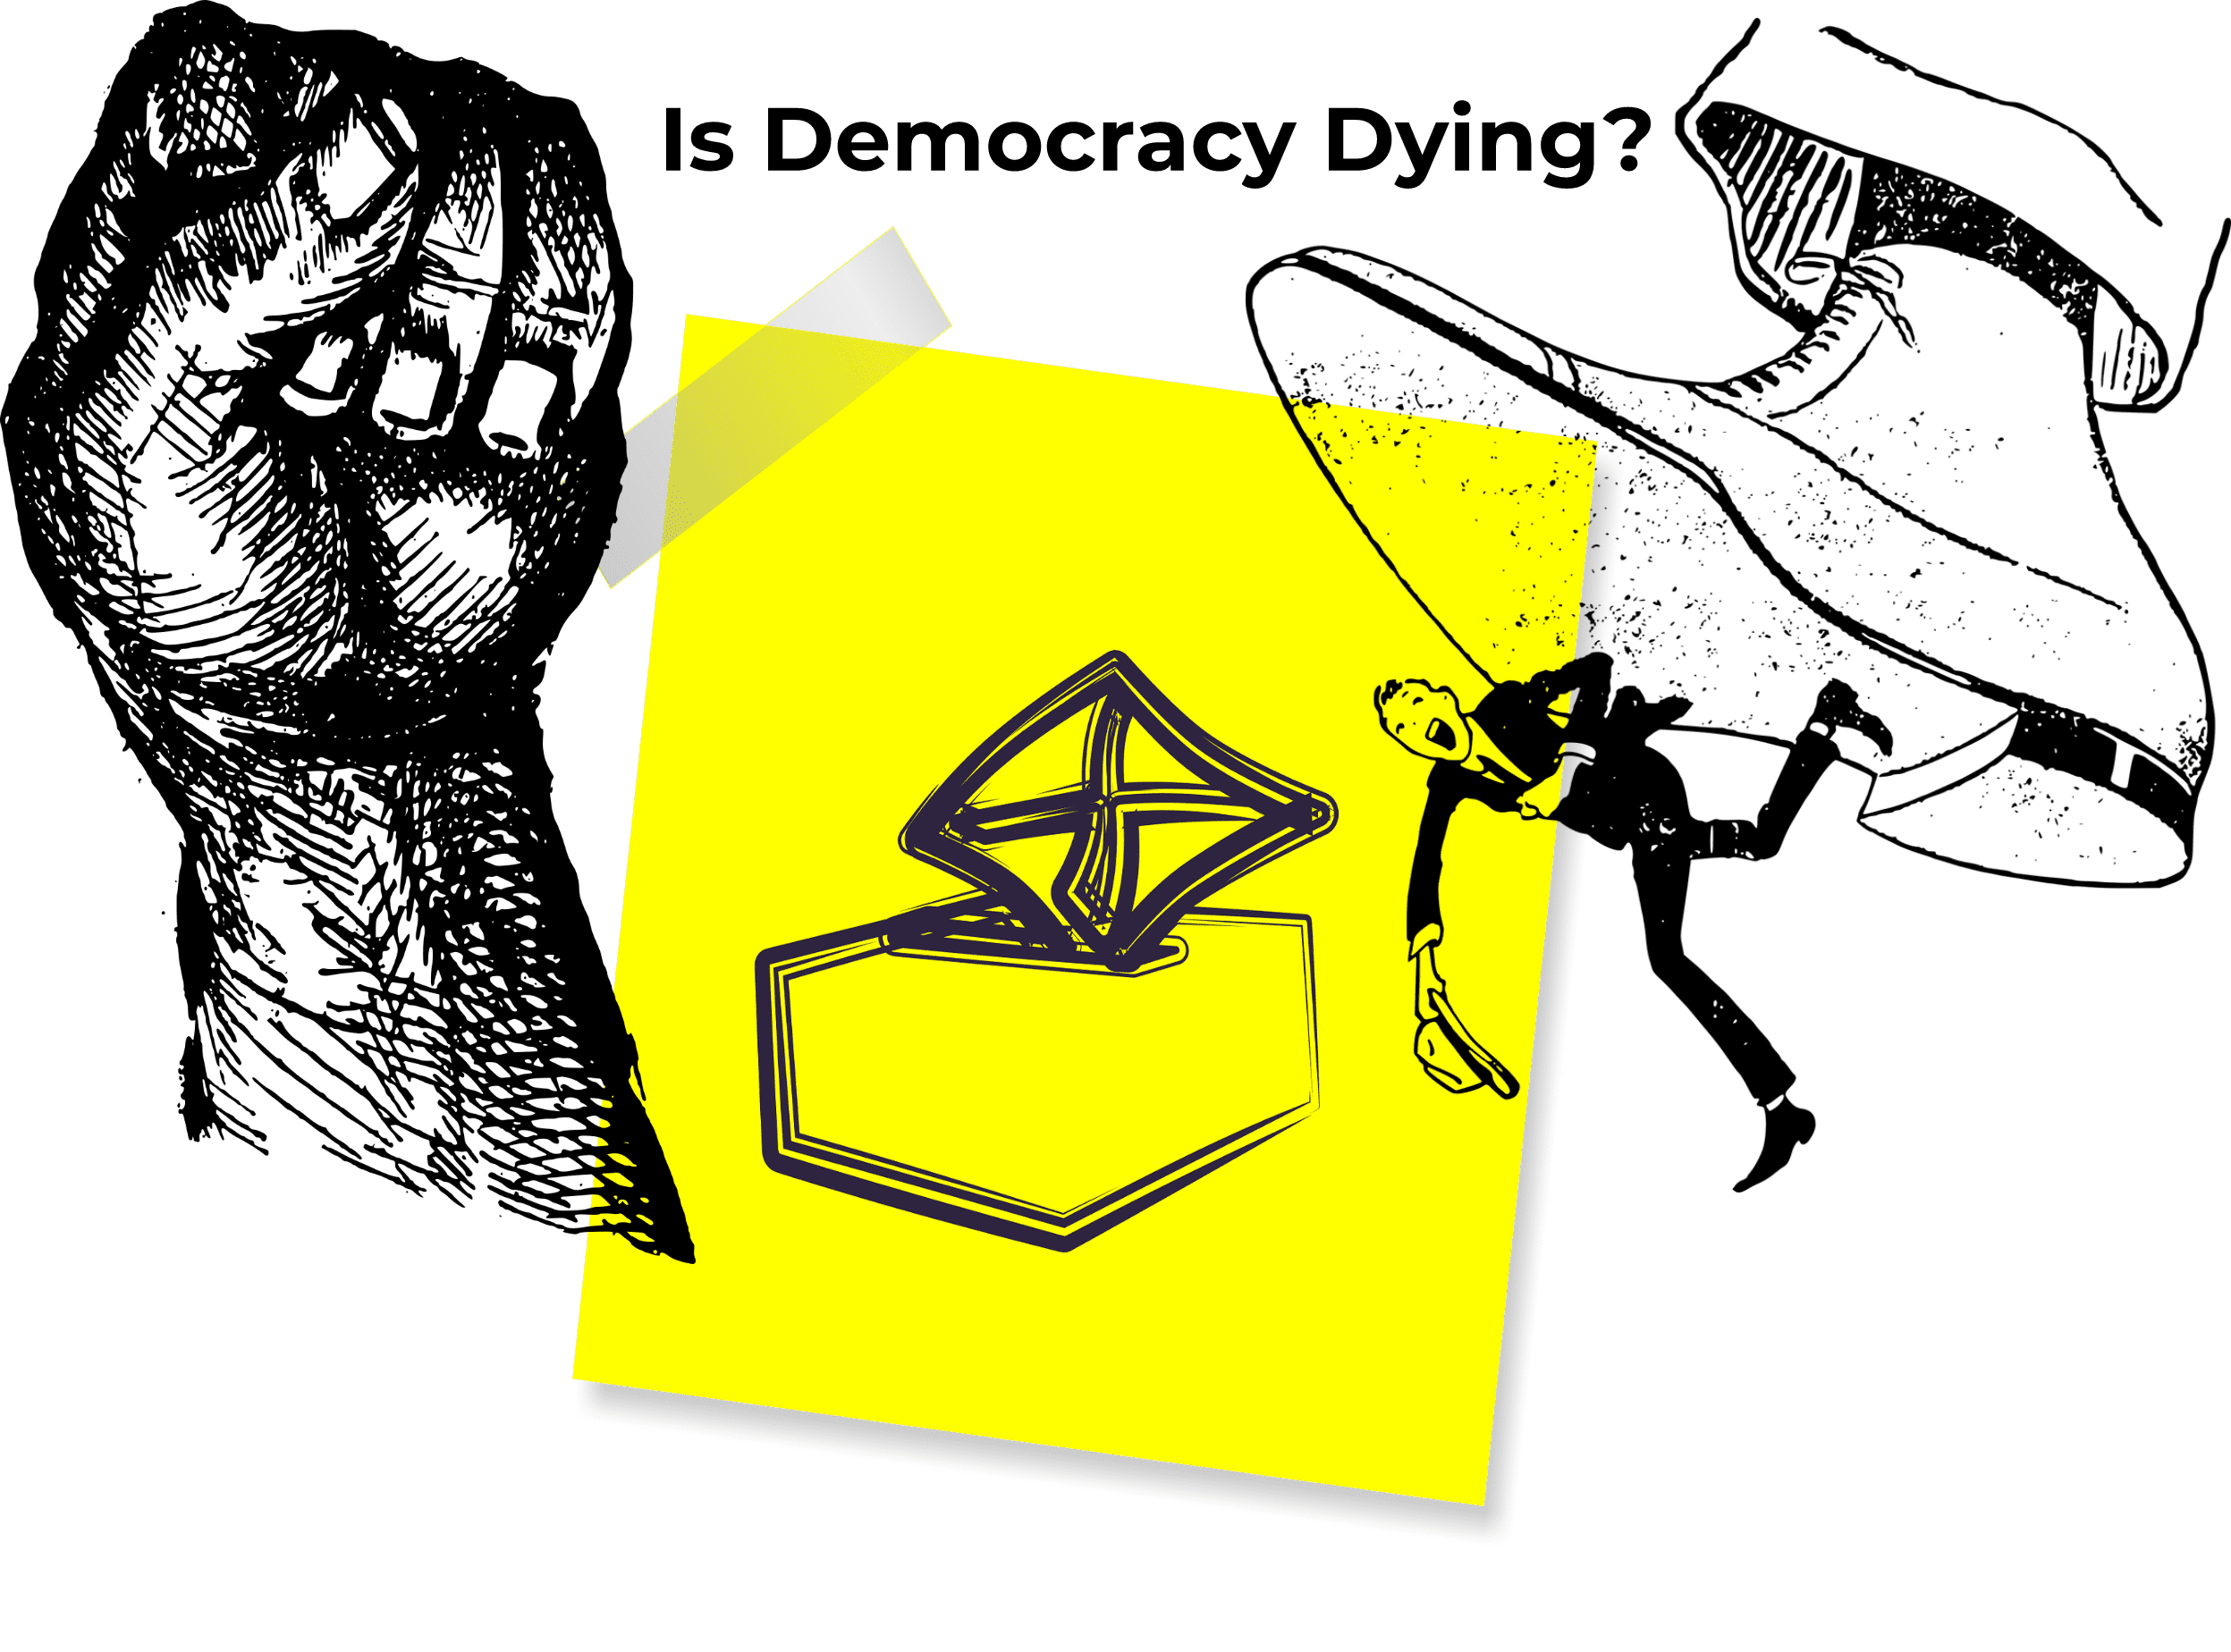                               Is democracy dead?                             
                              